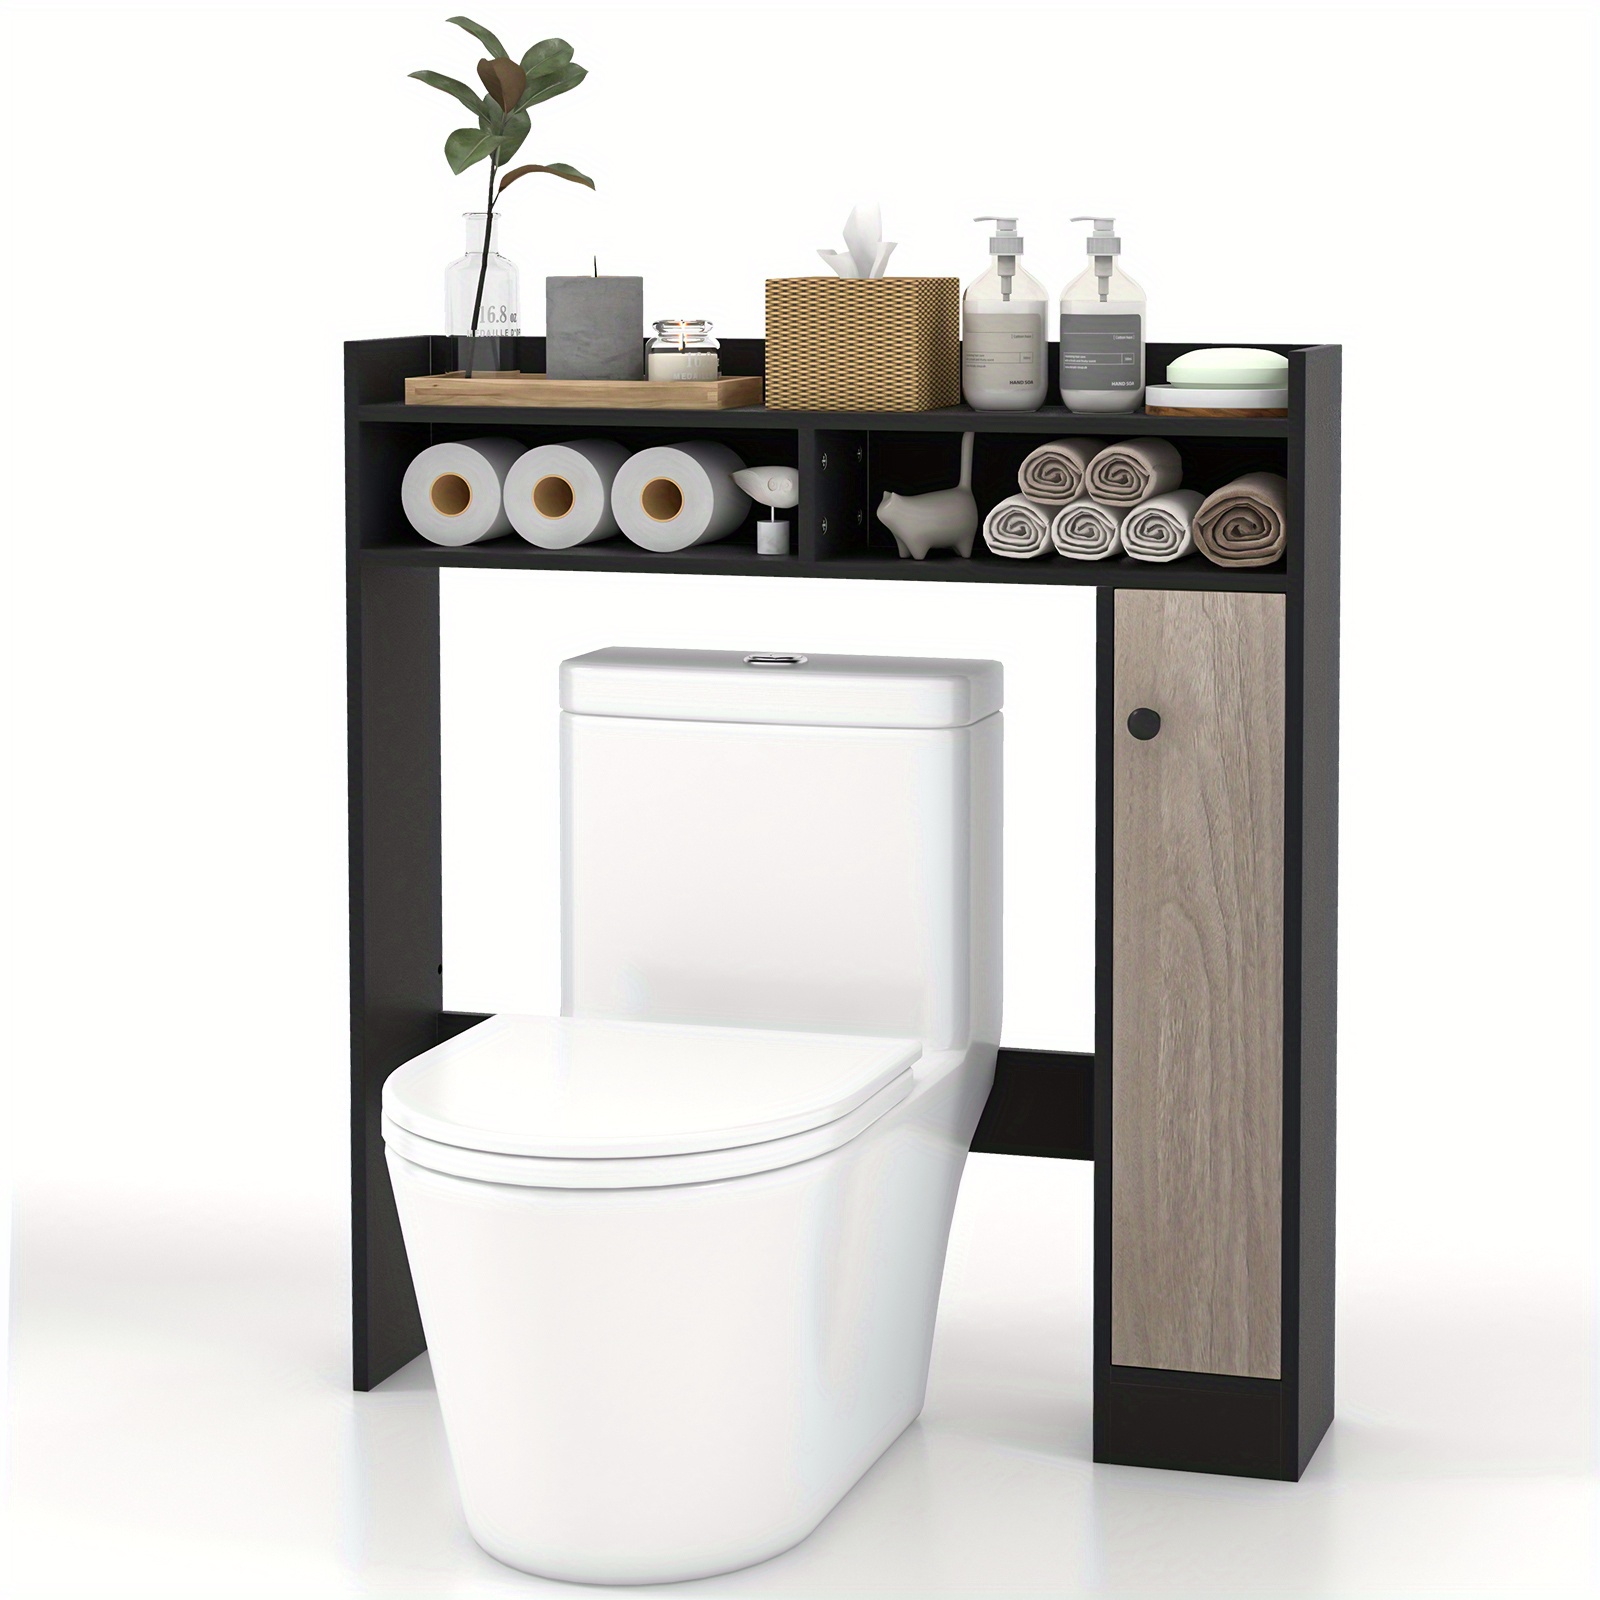 

Goplus Over The Toilet Bathroom Cabinet Floor Storage Organizer W/ Adjustable Shelves